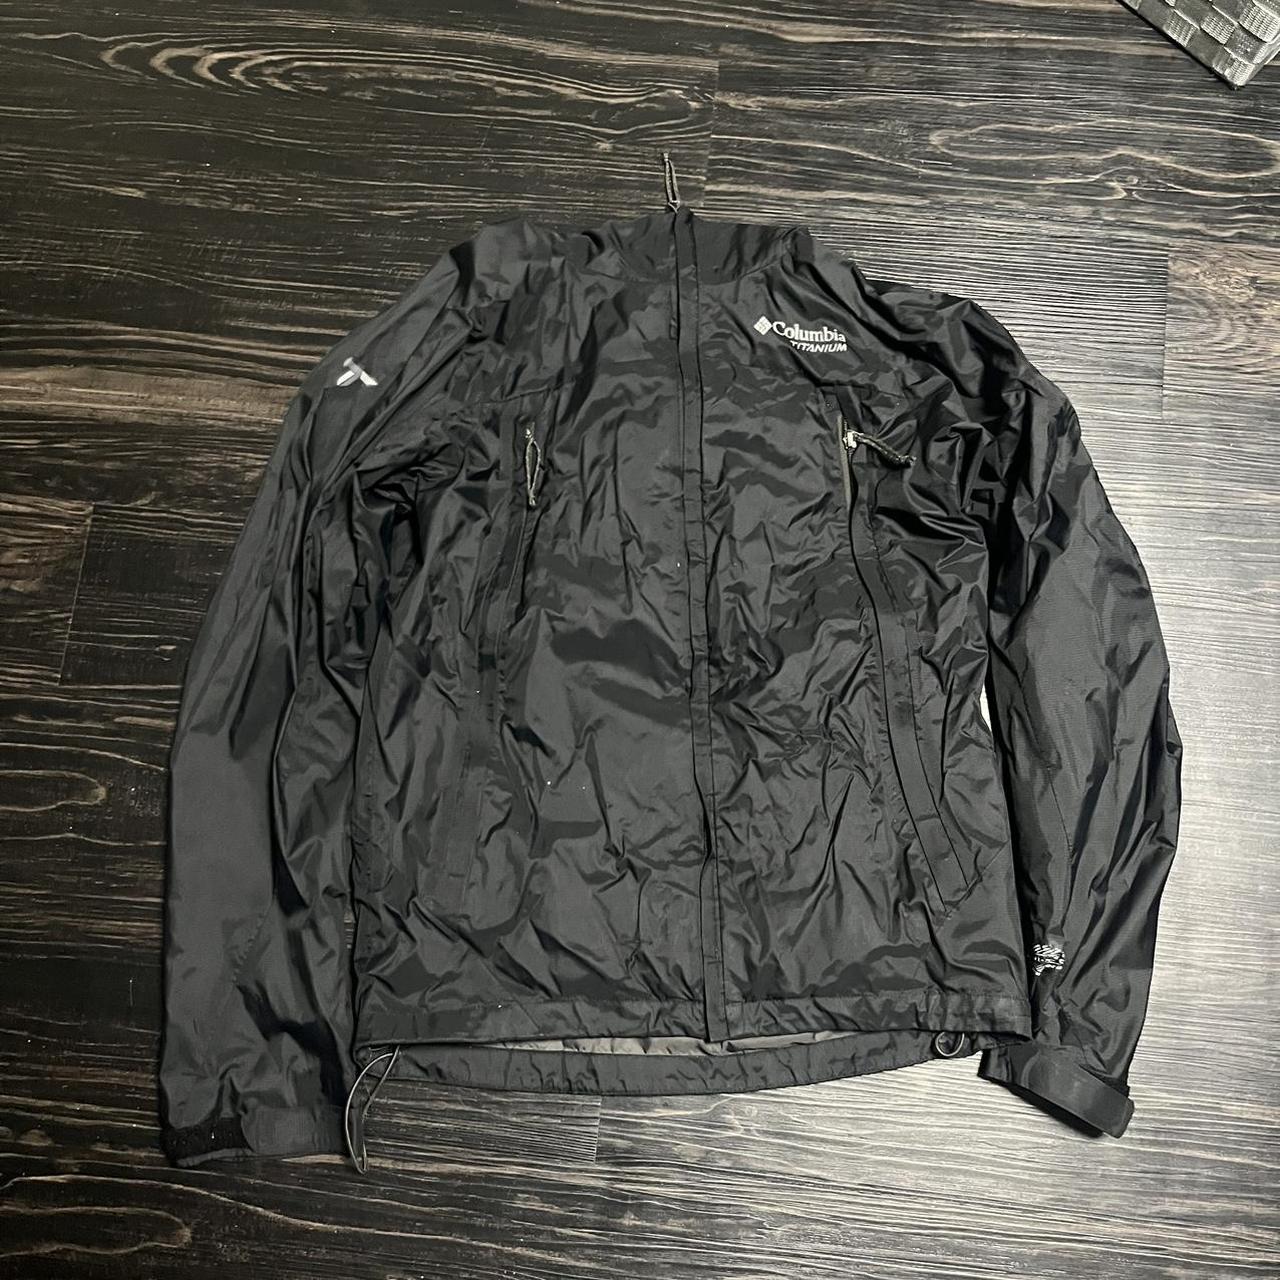 Awesome Columbia Titanium softshell jacket in black - Depop